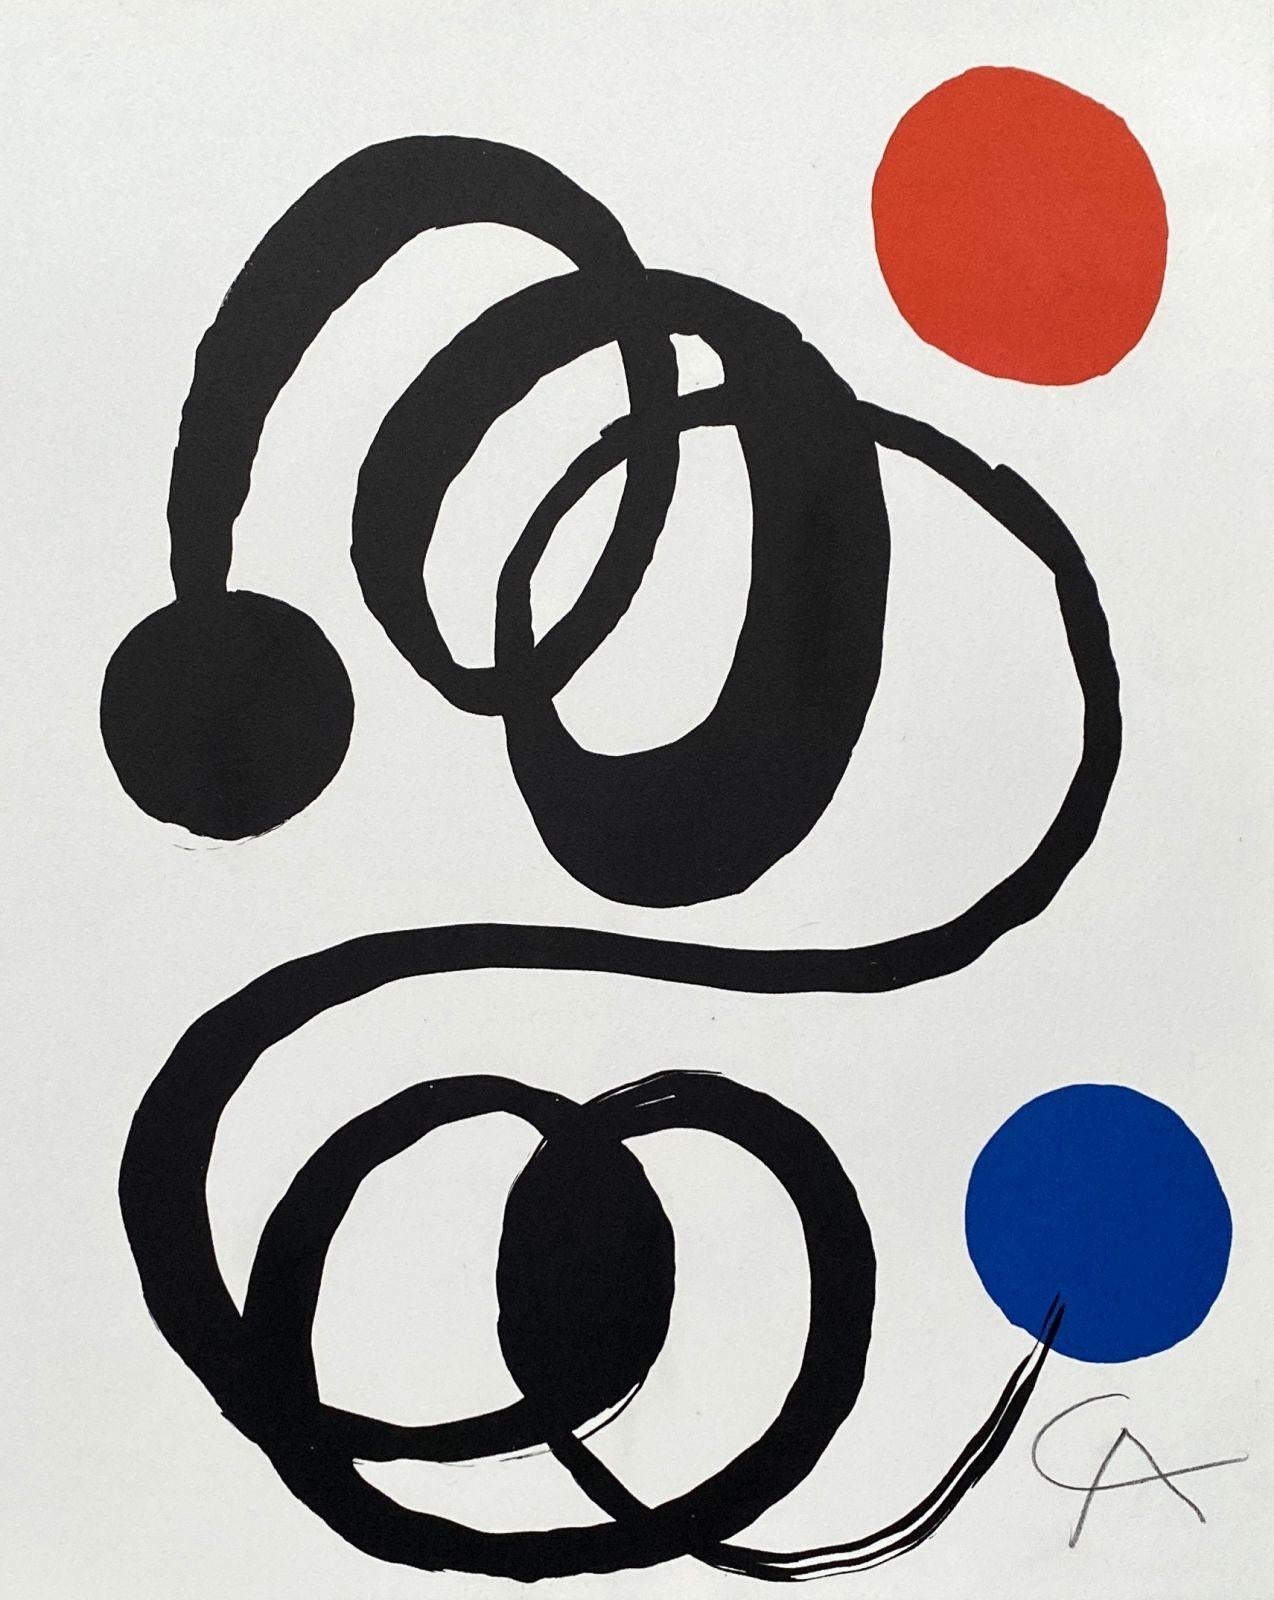 Alexander Calder Abstract Print - Black Spiral, Red & Blue Bubbles - Original Lithograph Hand Signed 